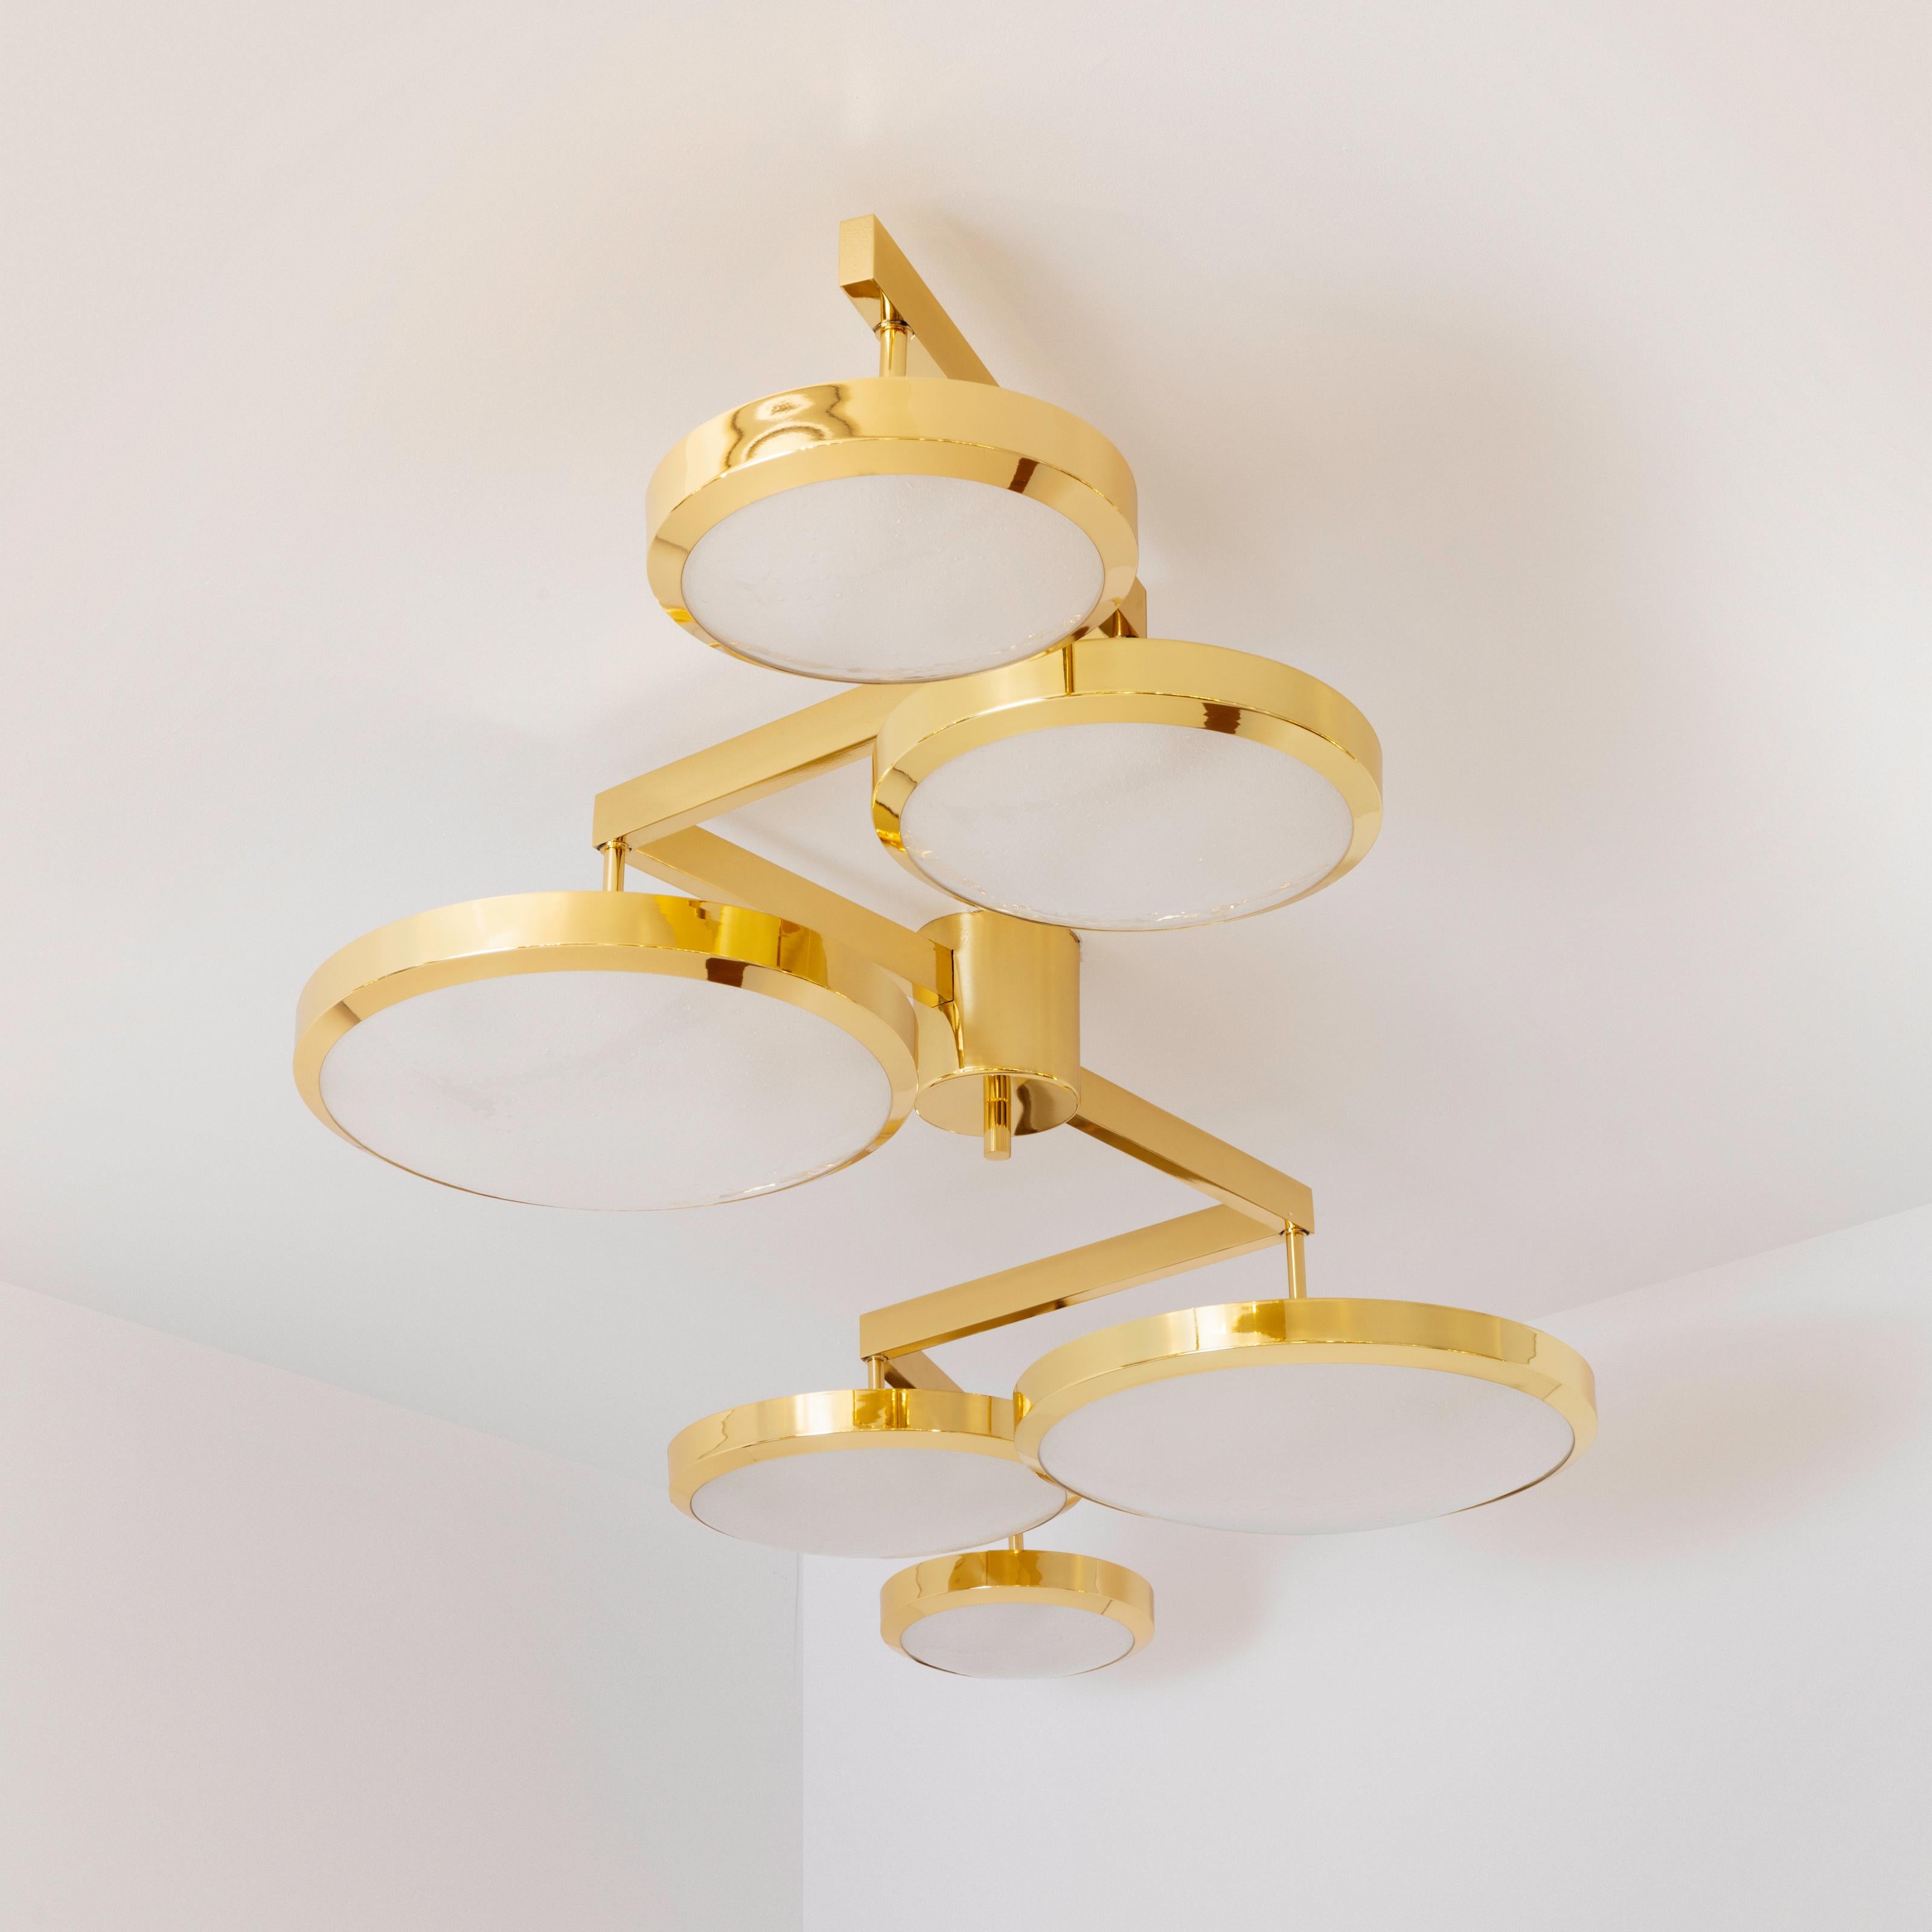 Italian Geometria Sospesa Ceiling Light by Gaspare Asaro-Polished Brass Finish For Sale